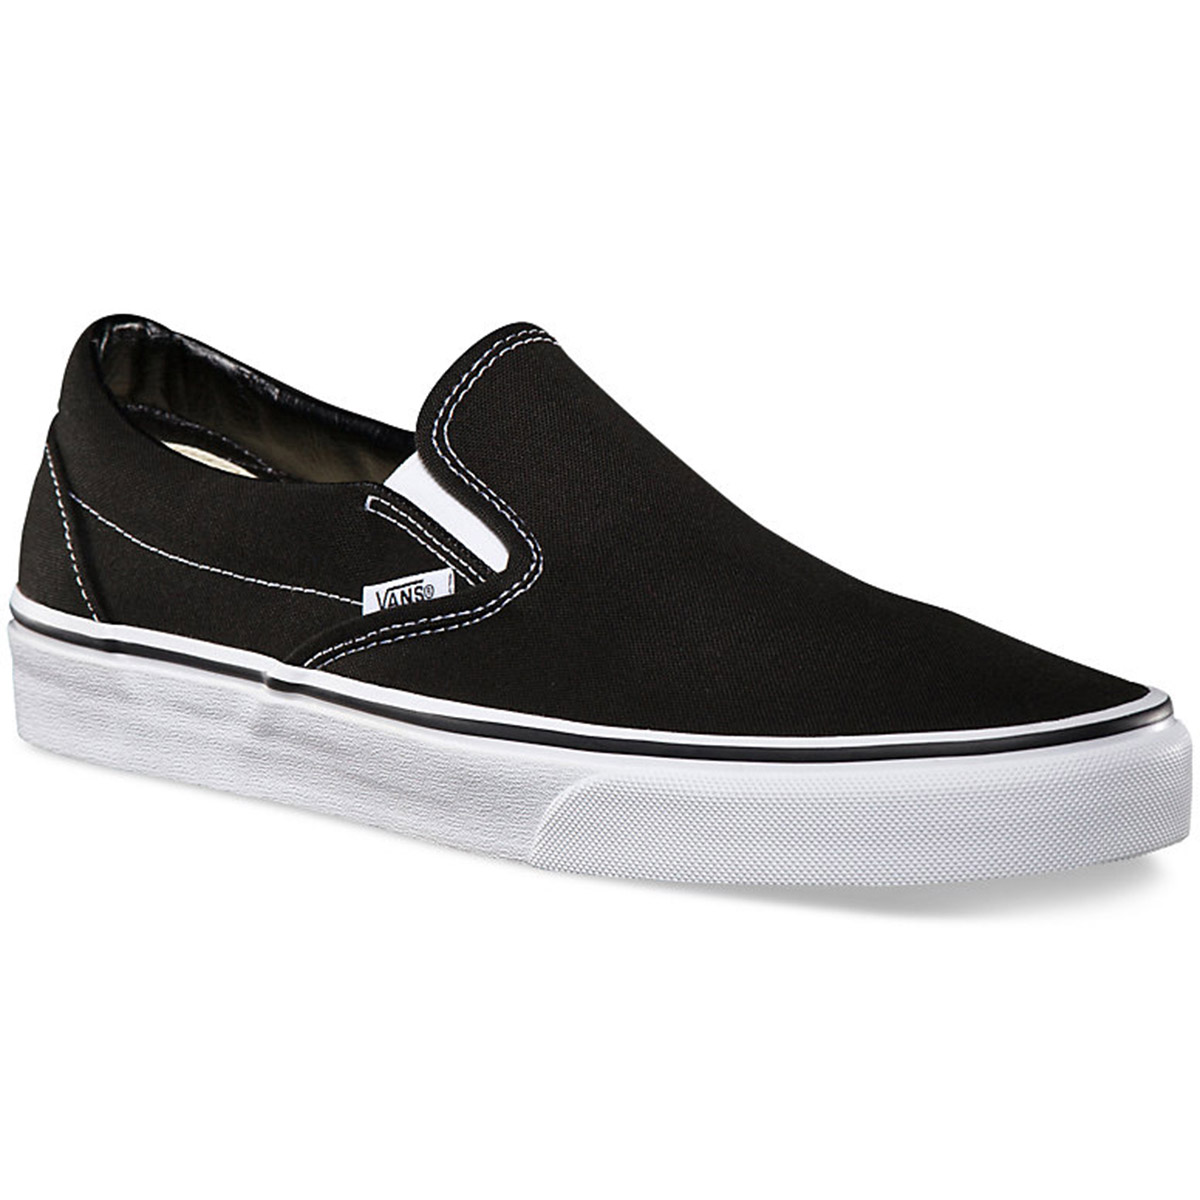 Vans Unisex Classic Slip-On Shoes - Black, 11.5